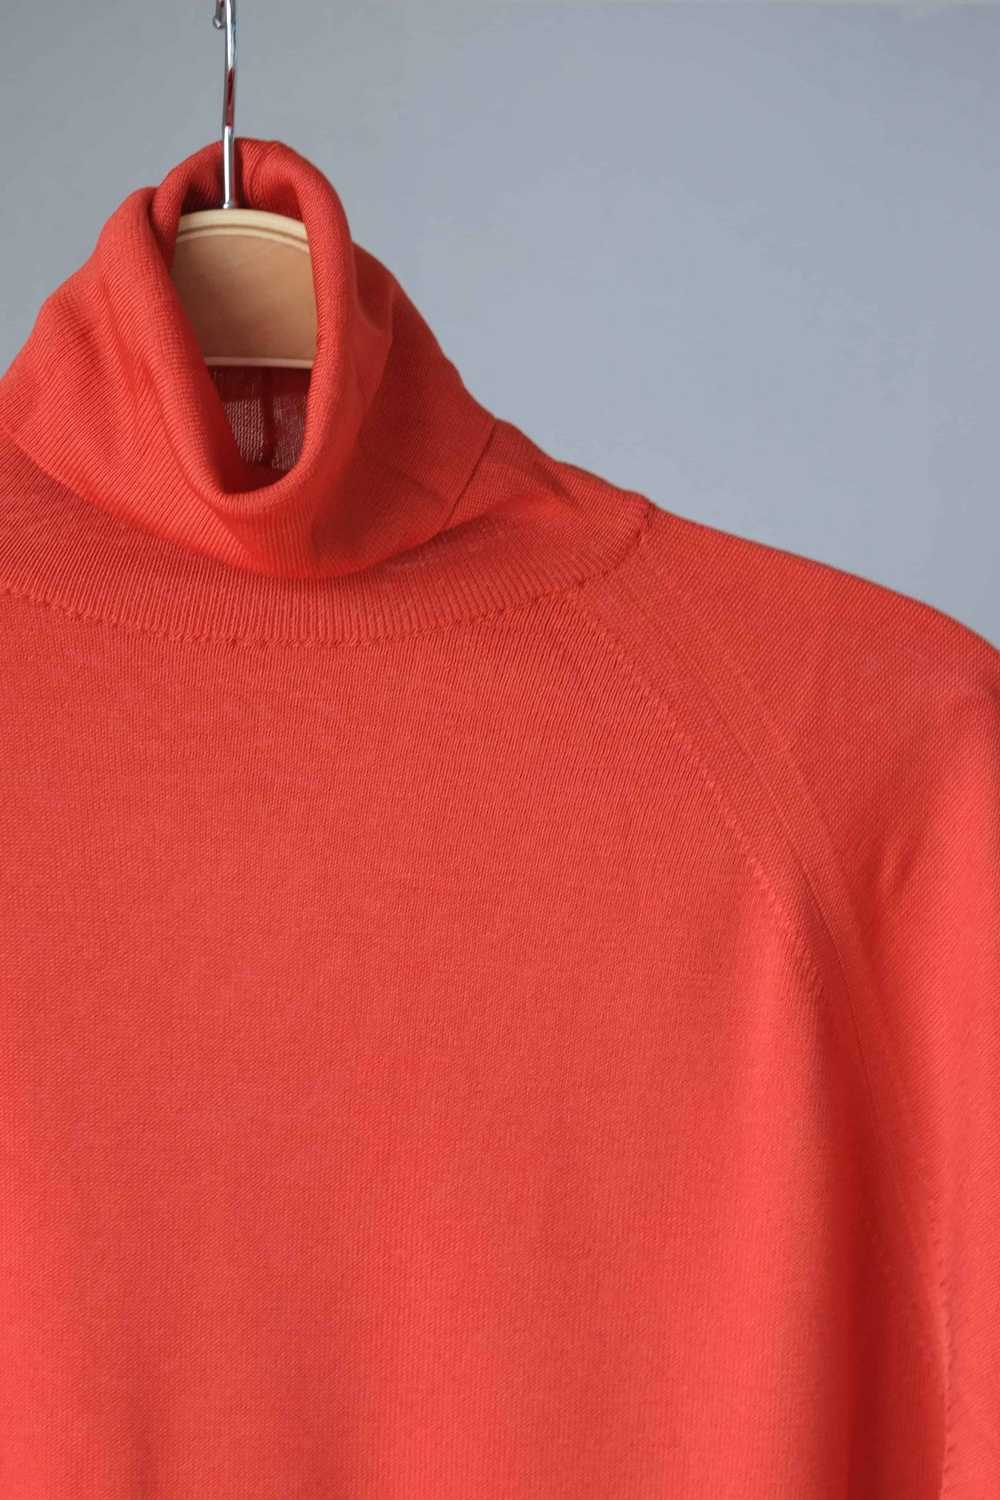 MORLEY 70's Turtleneck Sweater - image 4